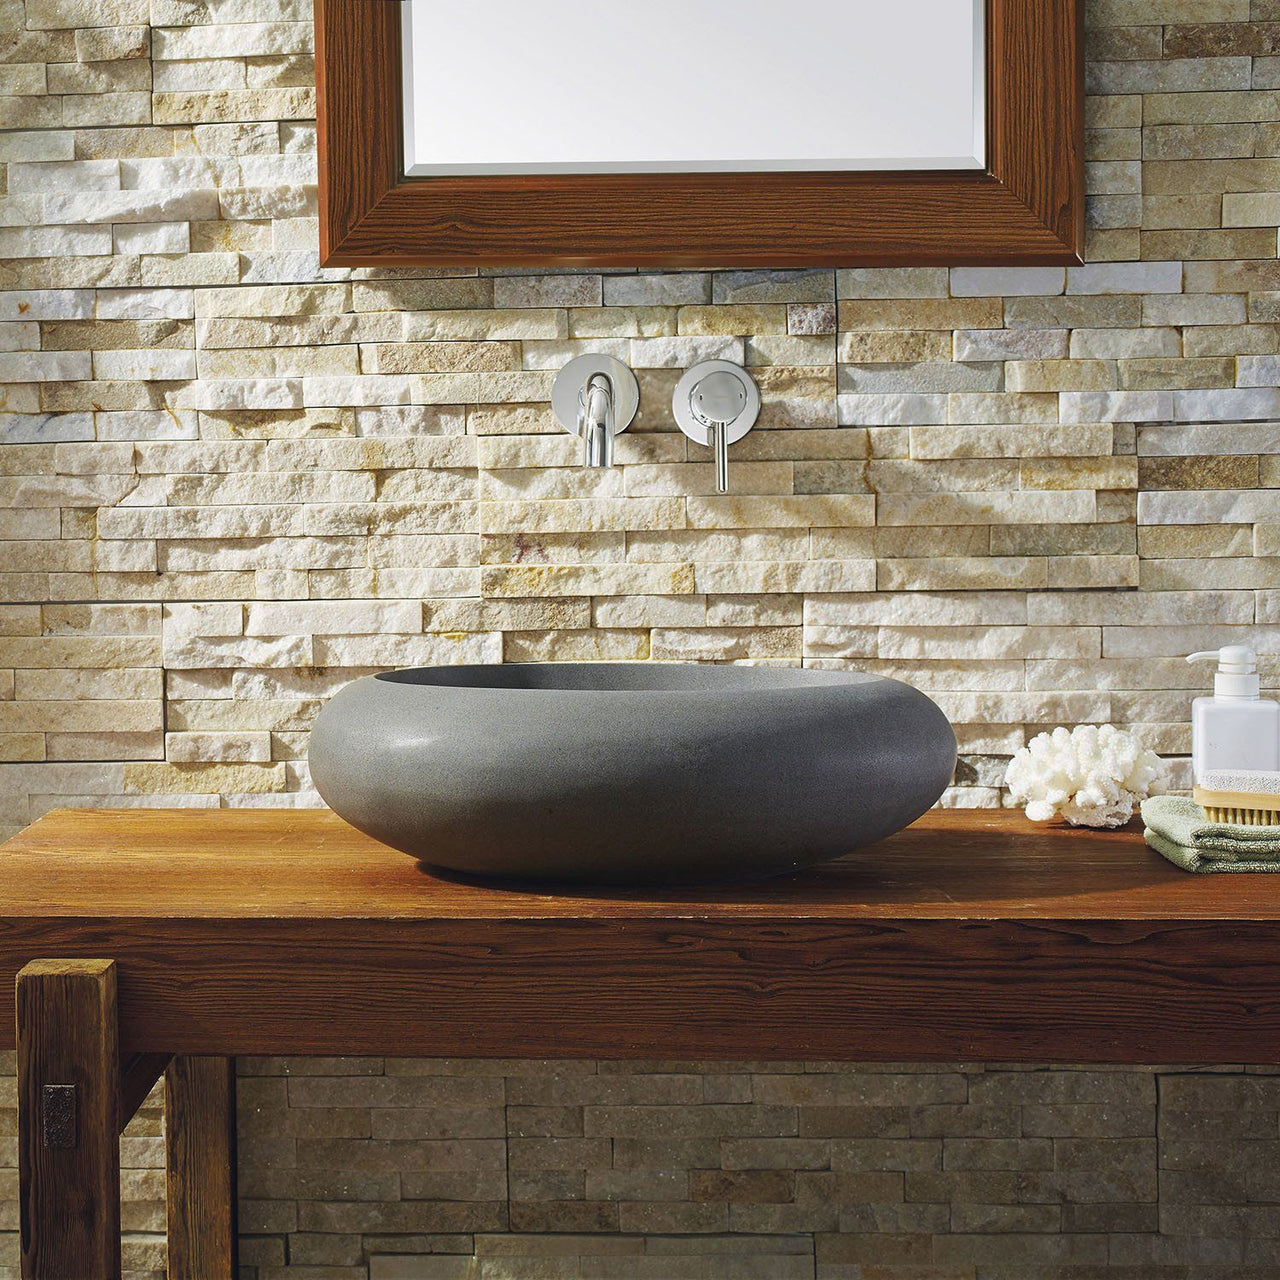 Virtu USA Athena Natural Stone Bathroom Vessel Sink in Andesite Granite Bathroom Sink Virtu USA 